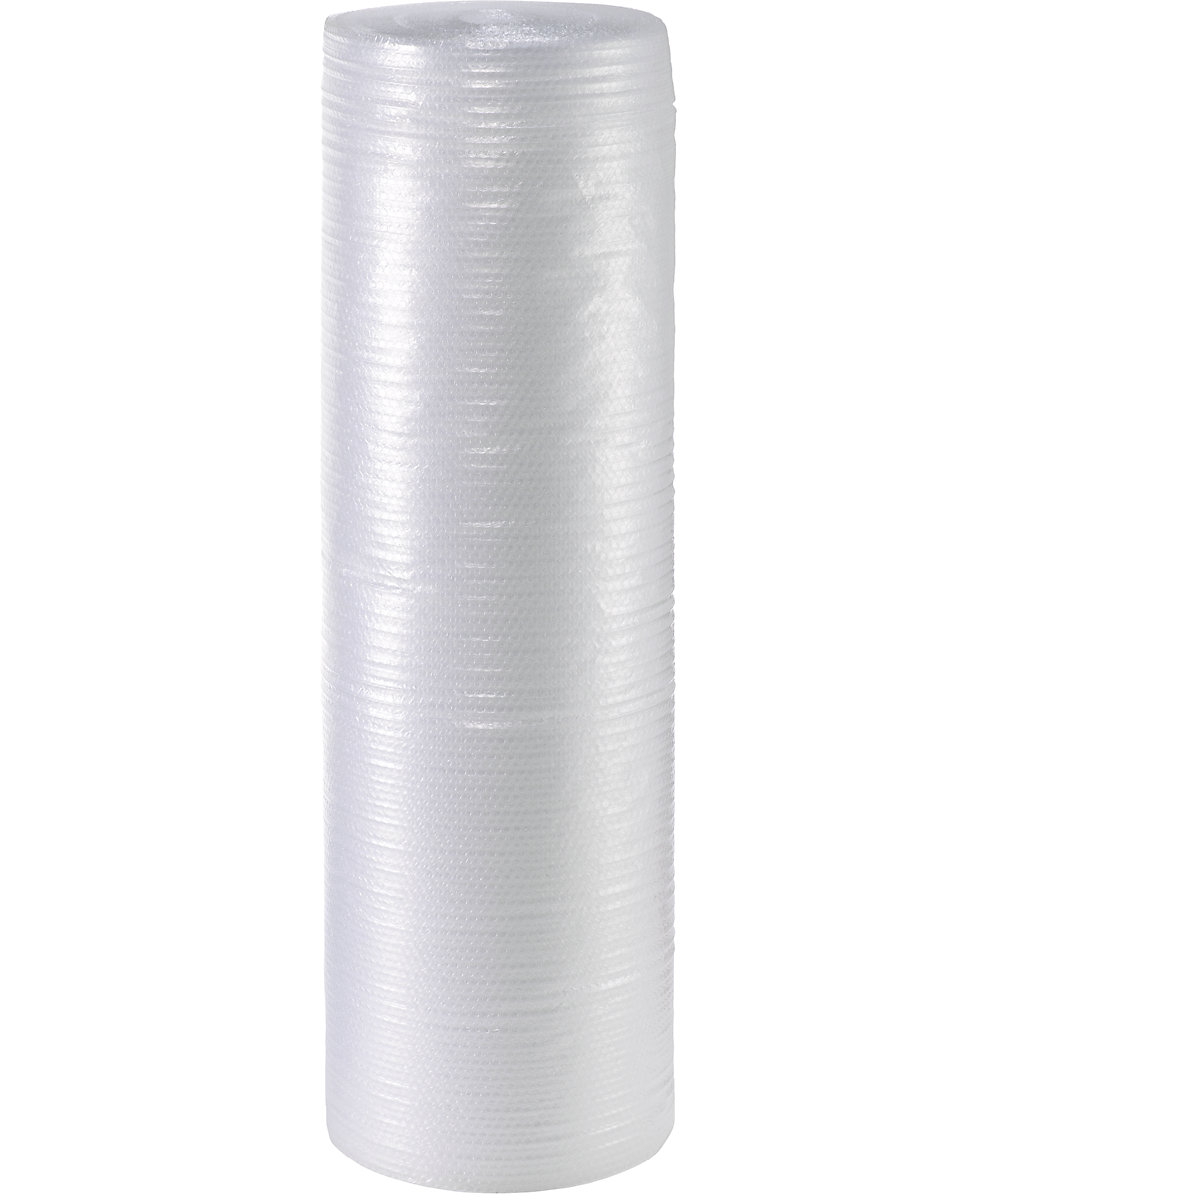 Bubble wrap film, 2-ply – eurokraft basic, film thickness 50 µm, width 1500 mm-2